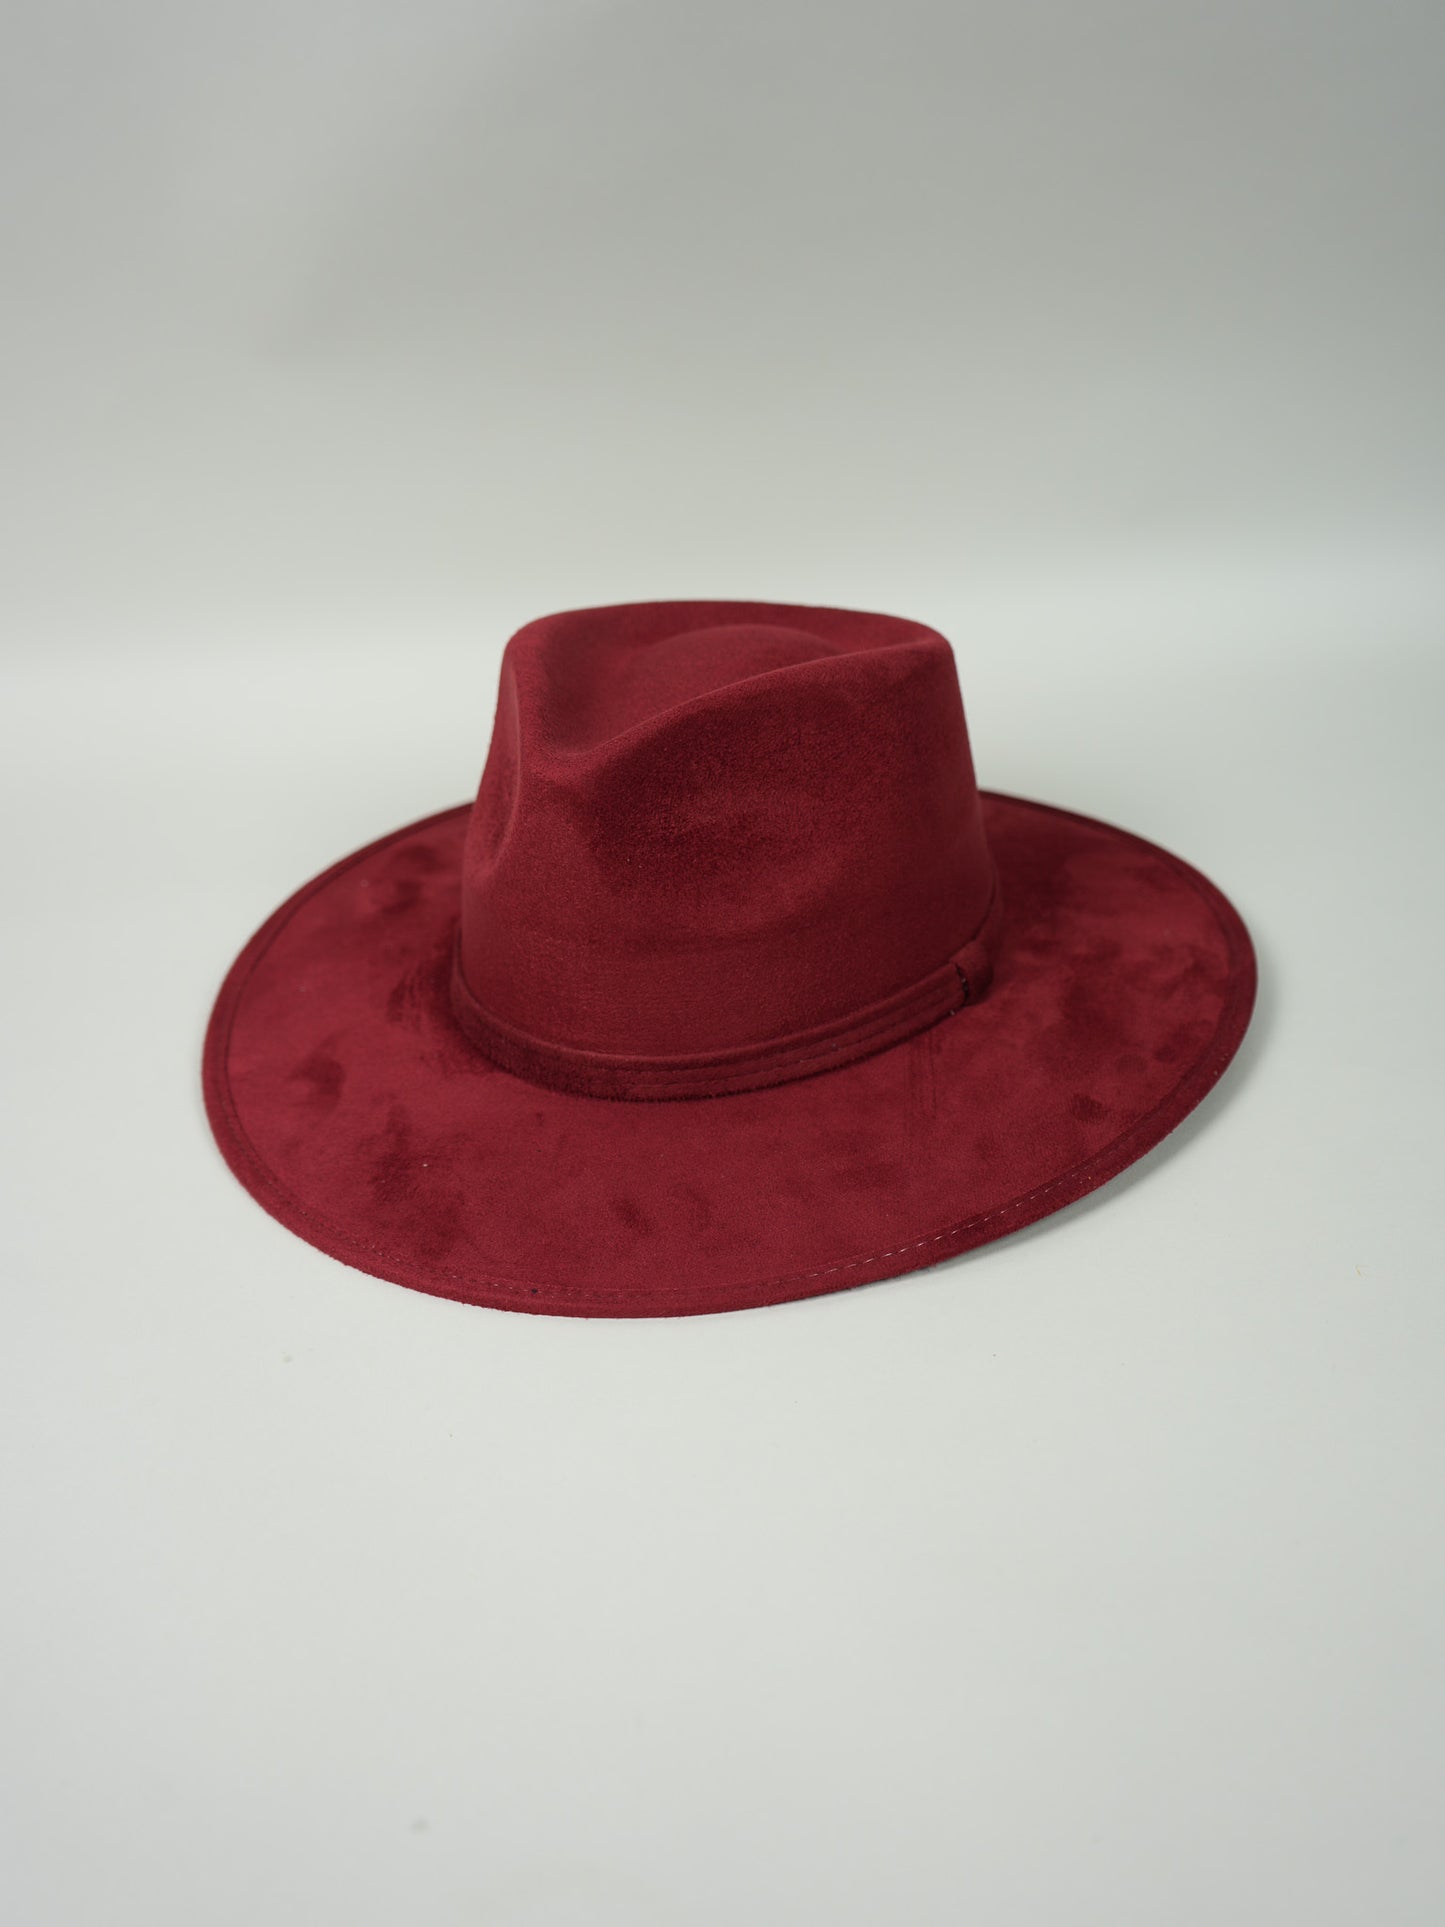 PREORDER Vegan Suede Rancher Hat - Burgundy Red